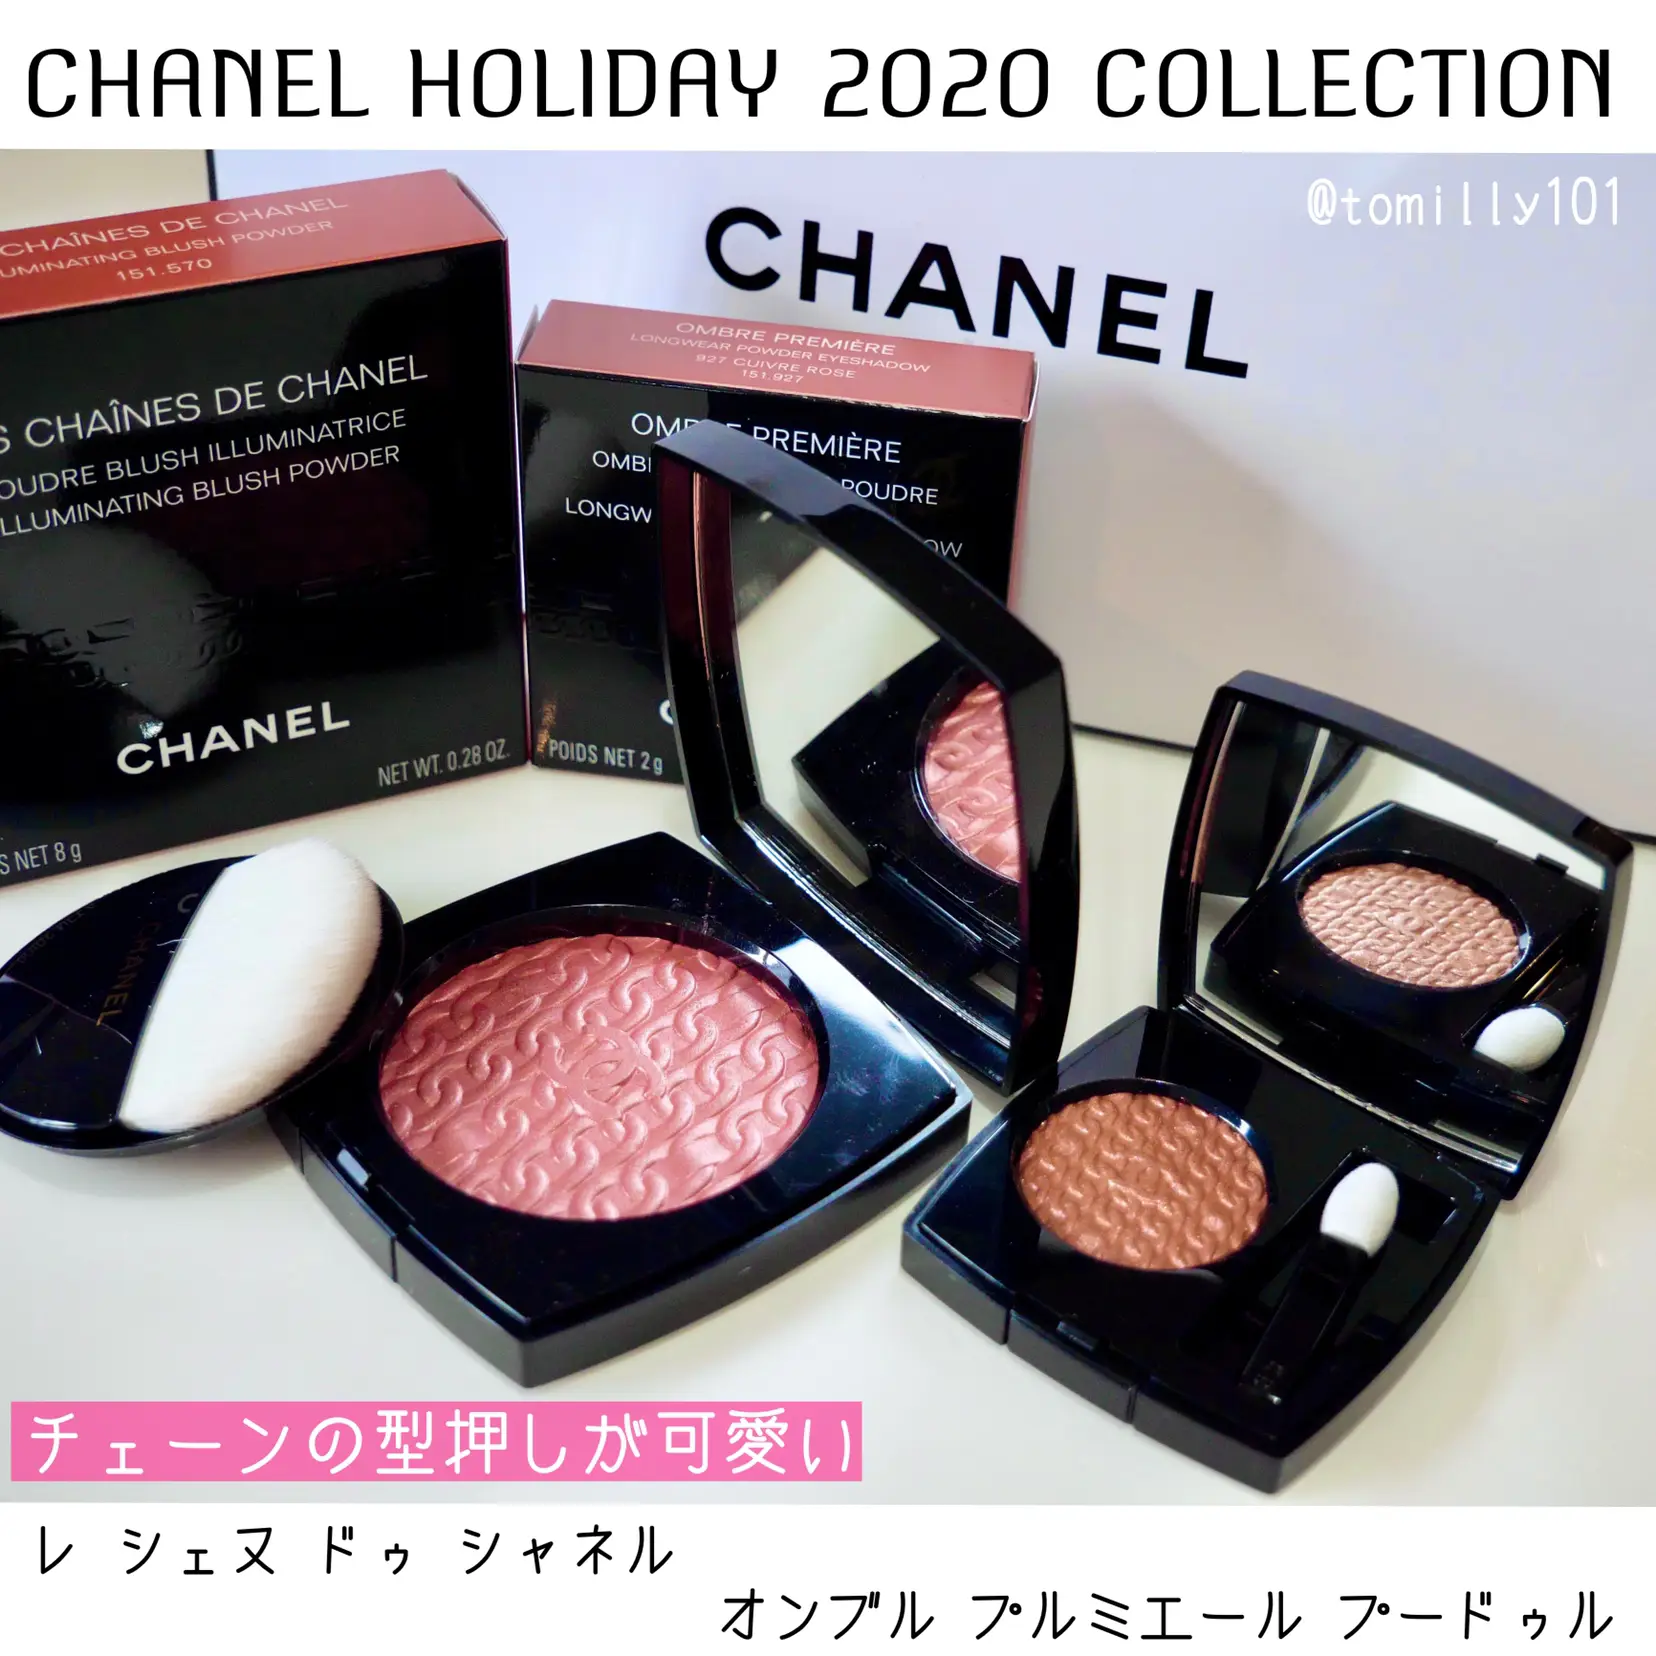 Chanel Les Chaines de Chanel Illuminating Blush Powder Review